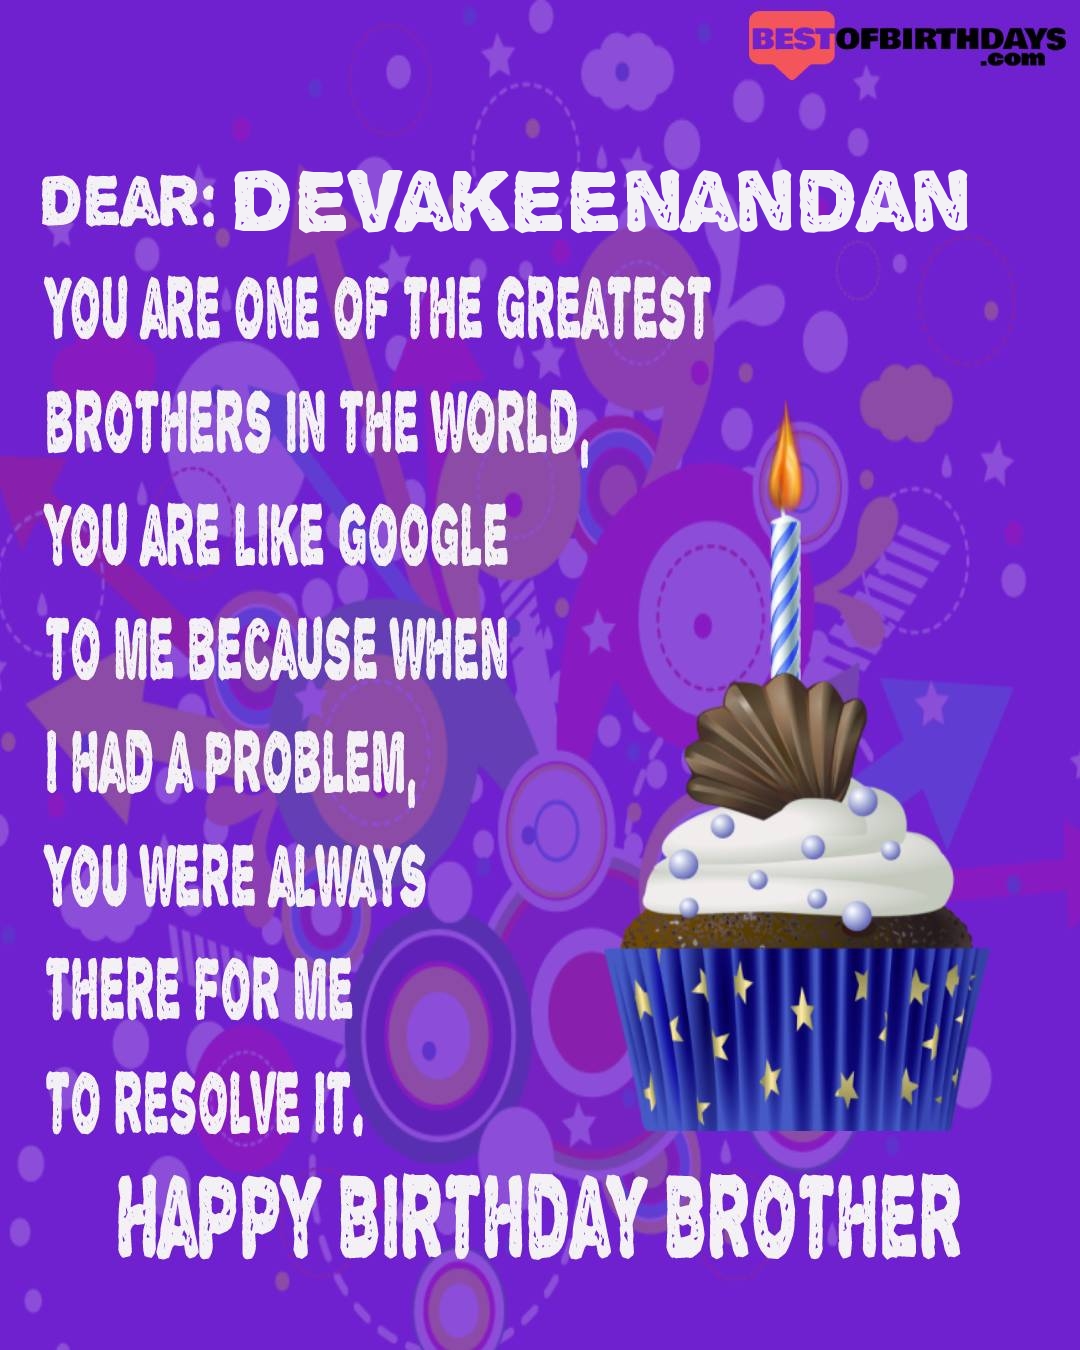 Happy birthday devakeenandan bhai brother bro